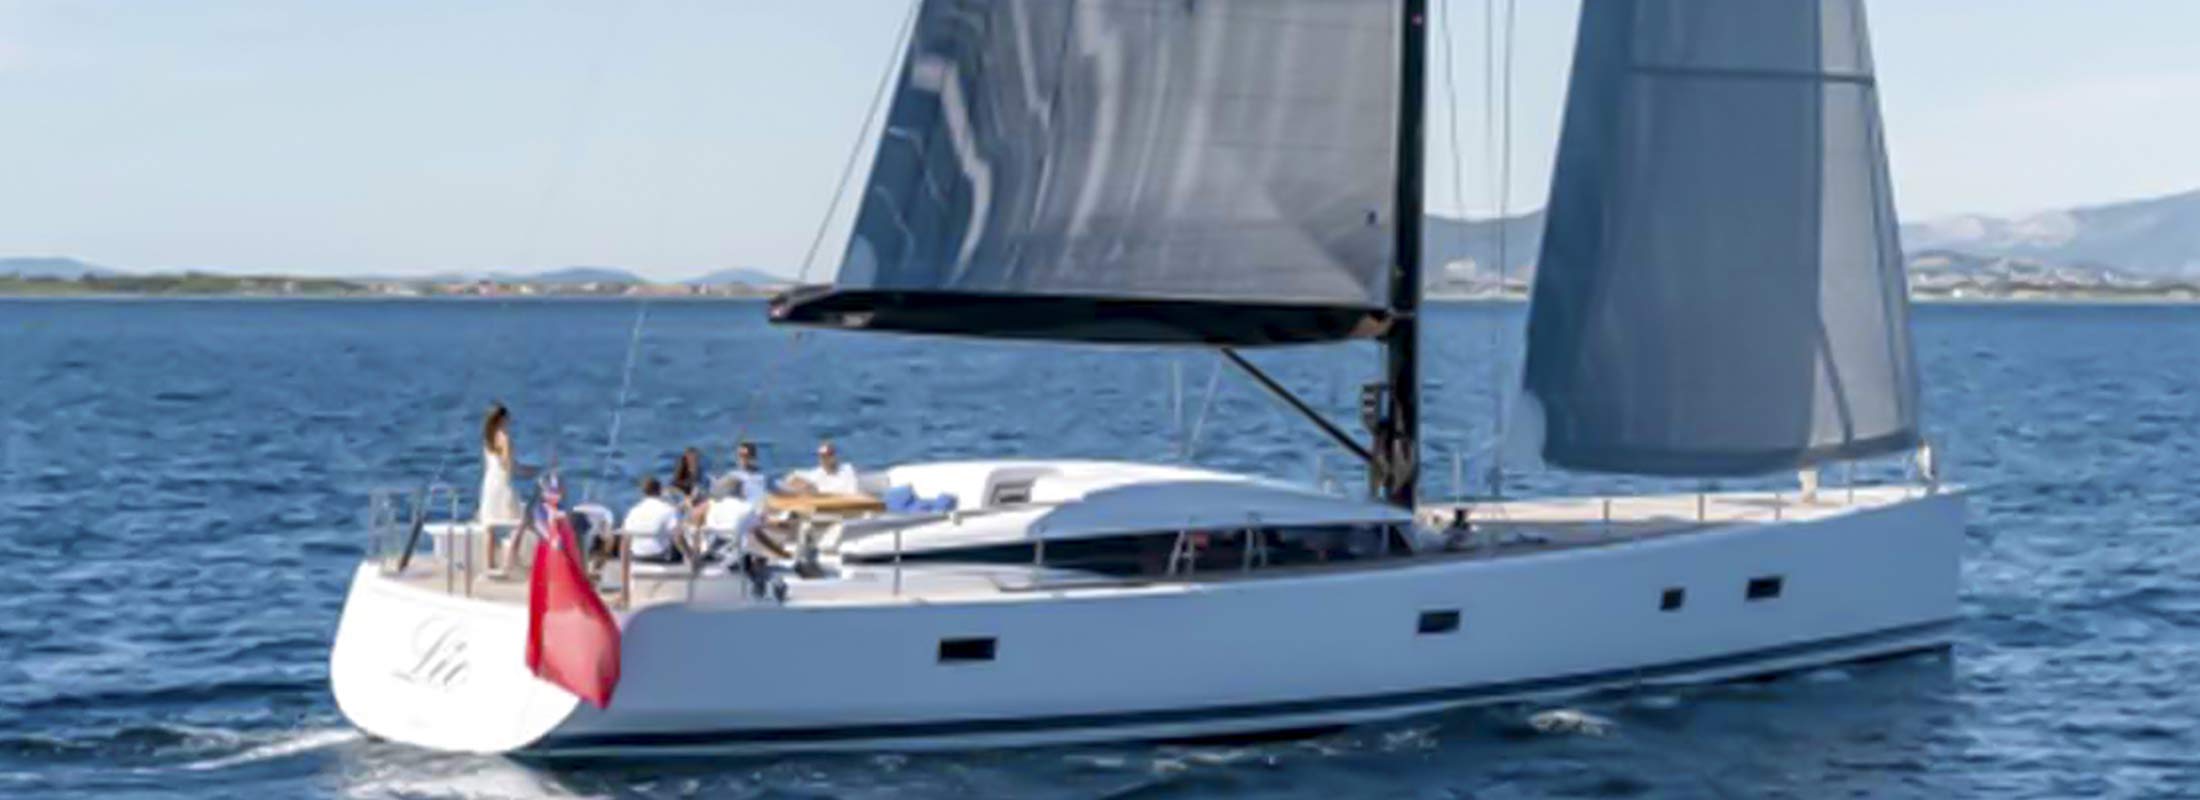 Leo Sailing Yacht for Charter Mediterranean slider 2